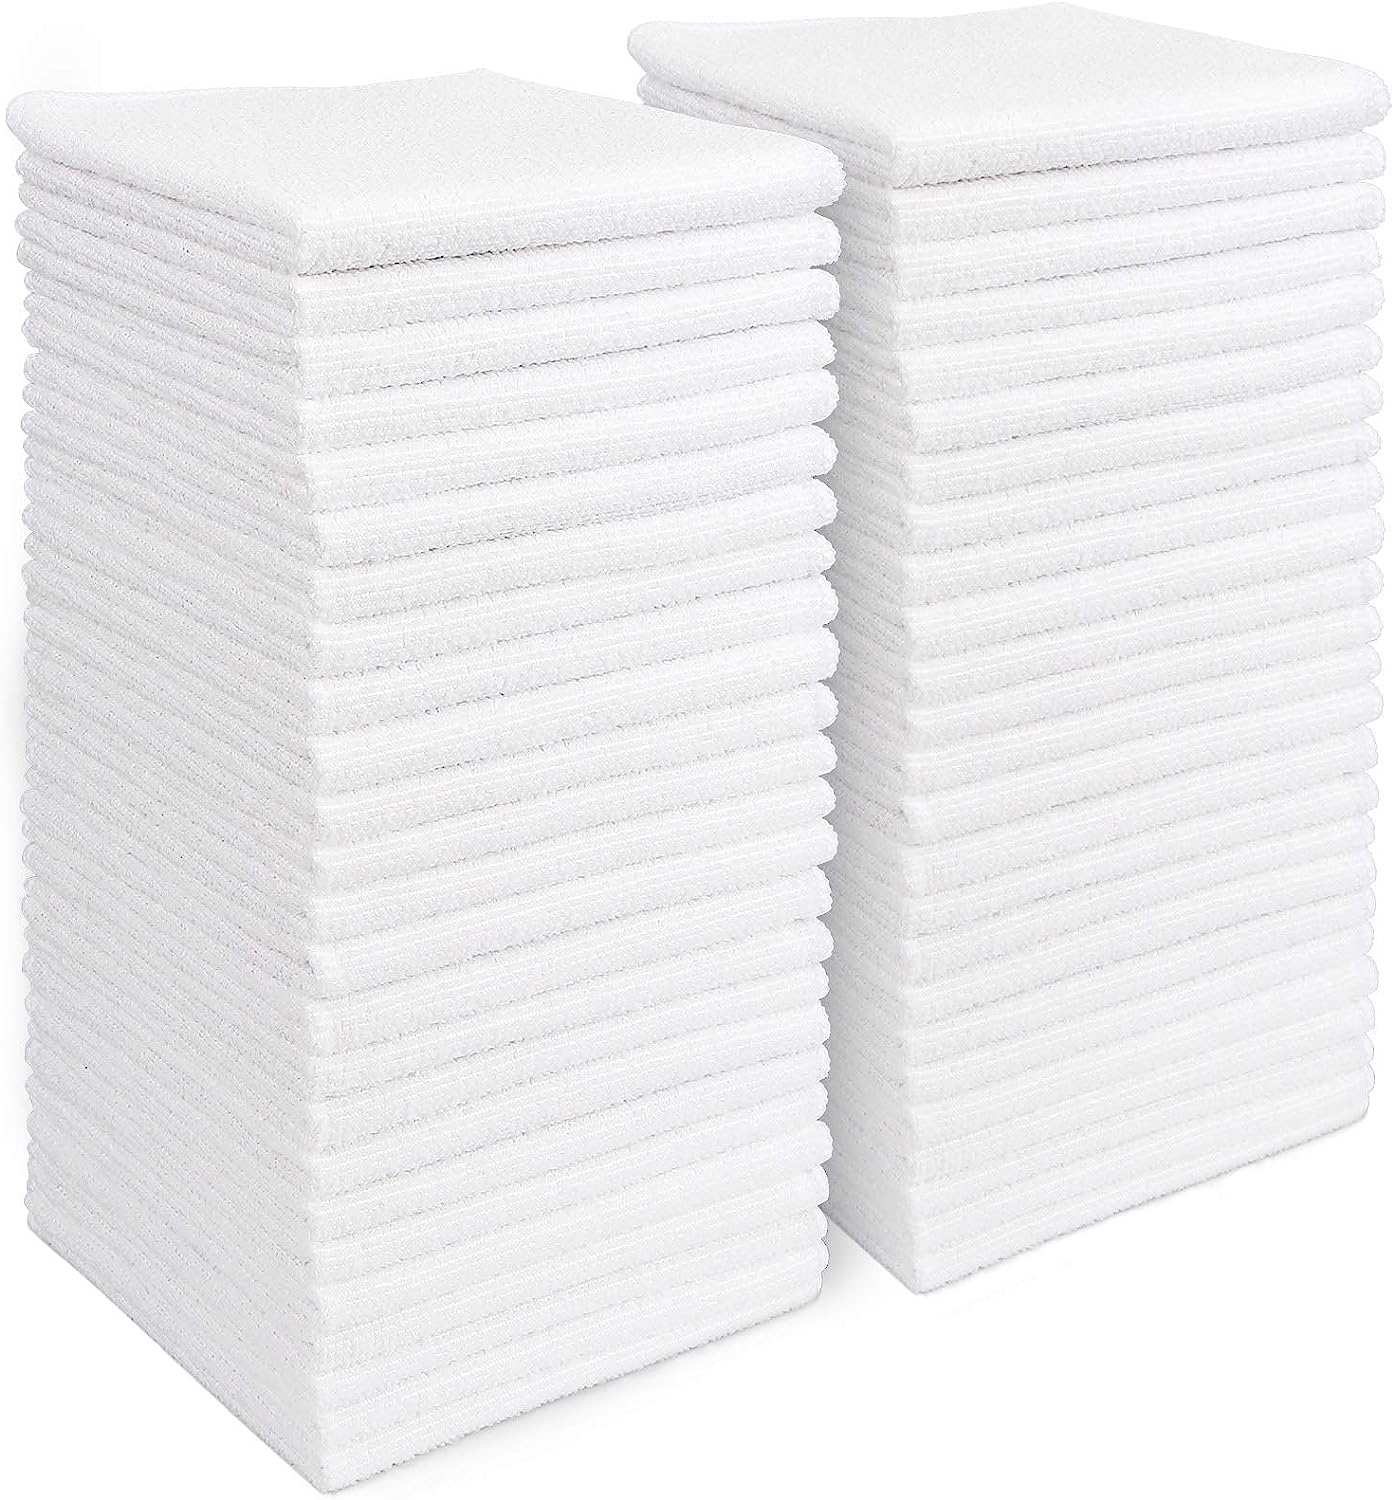 White Microfiber Towels (50 Pack)